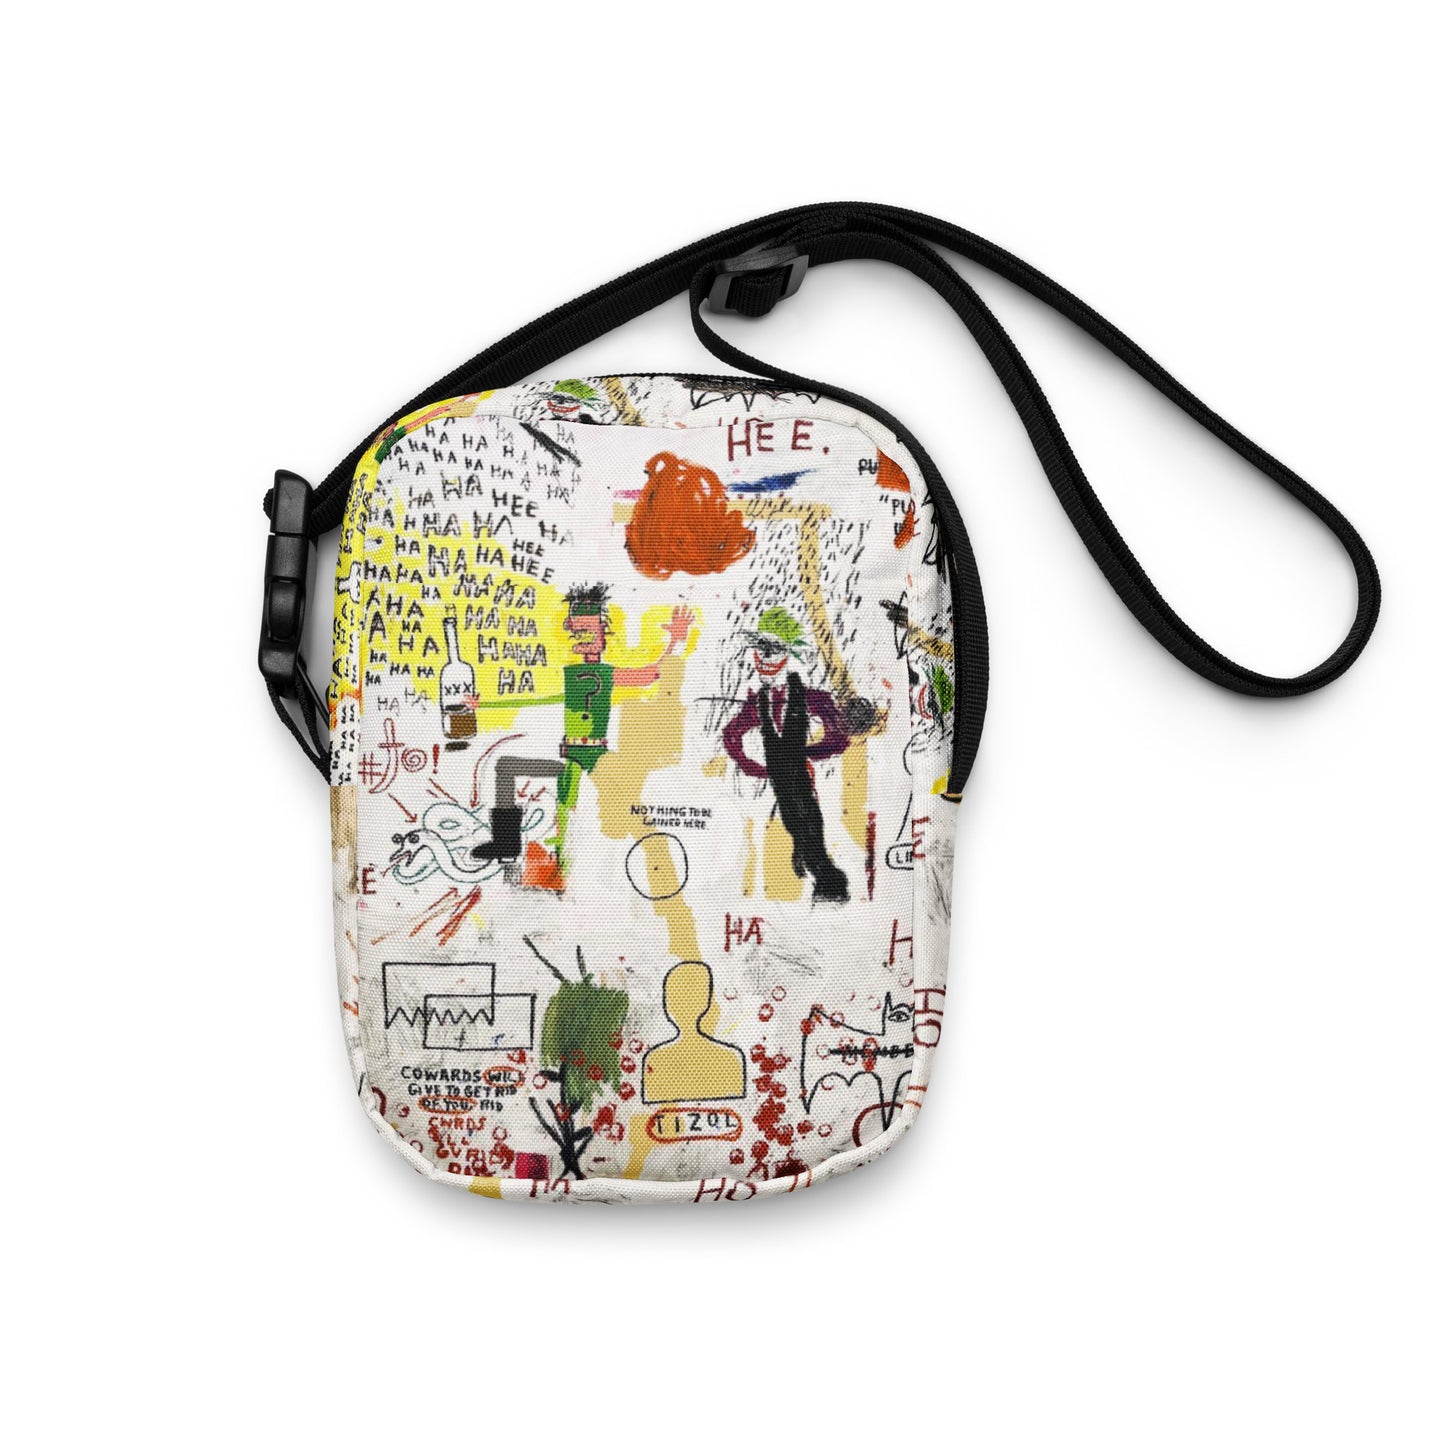 Jean-Michel Basquiat "Riddle Me This Batman" Artwork Bag